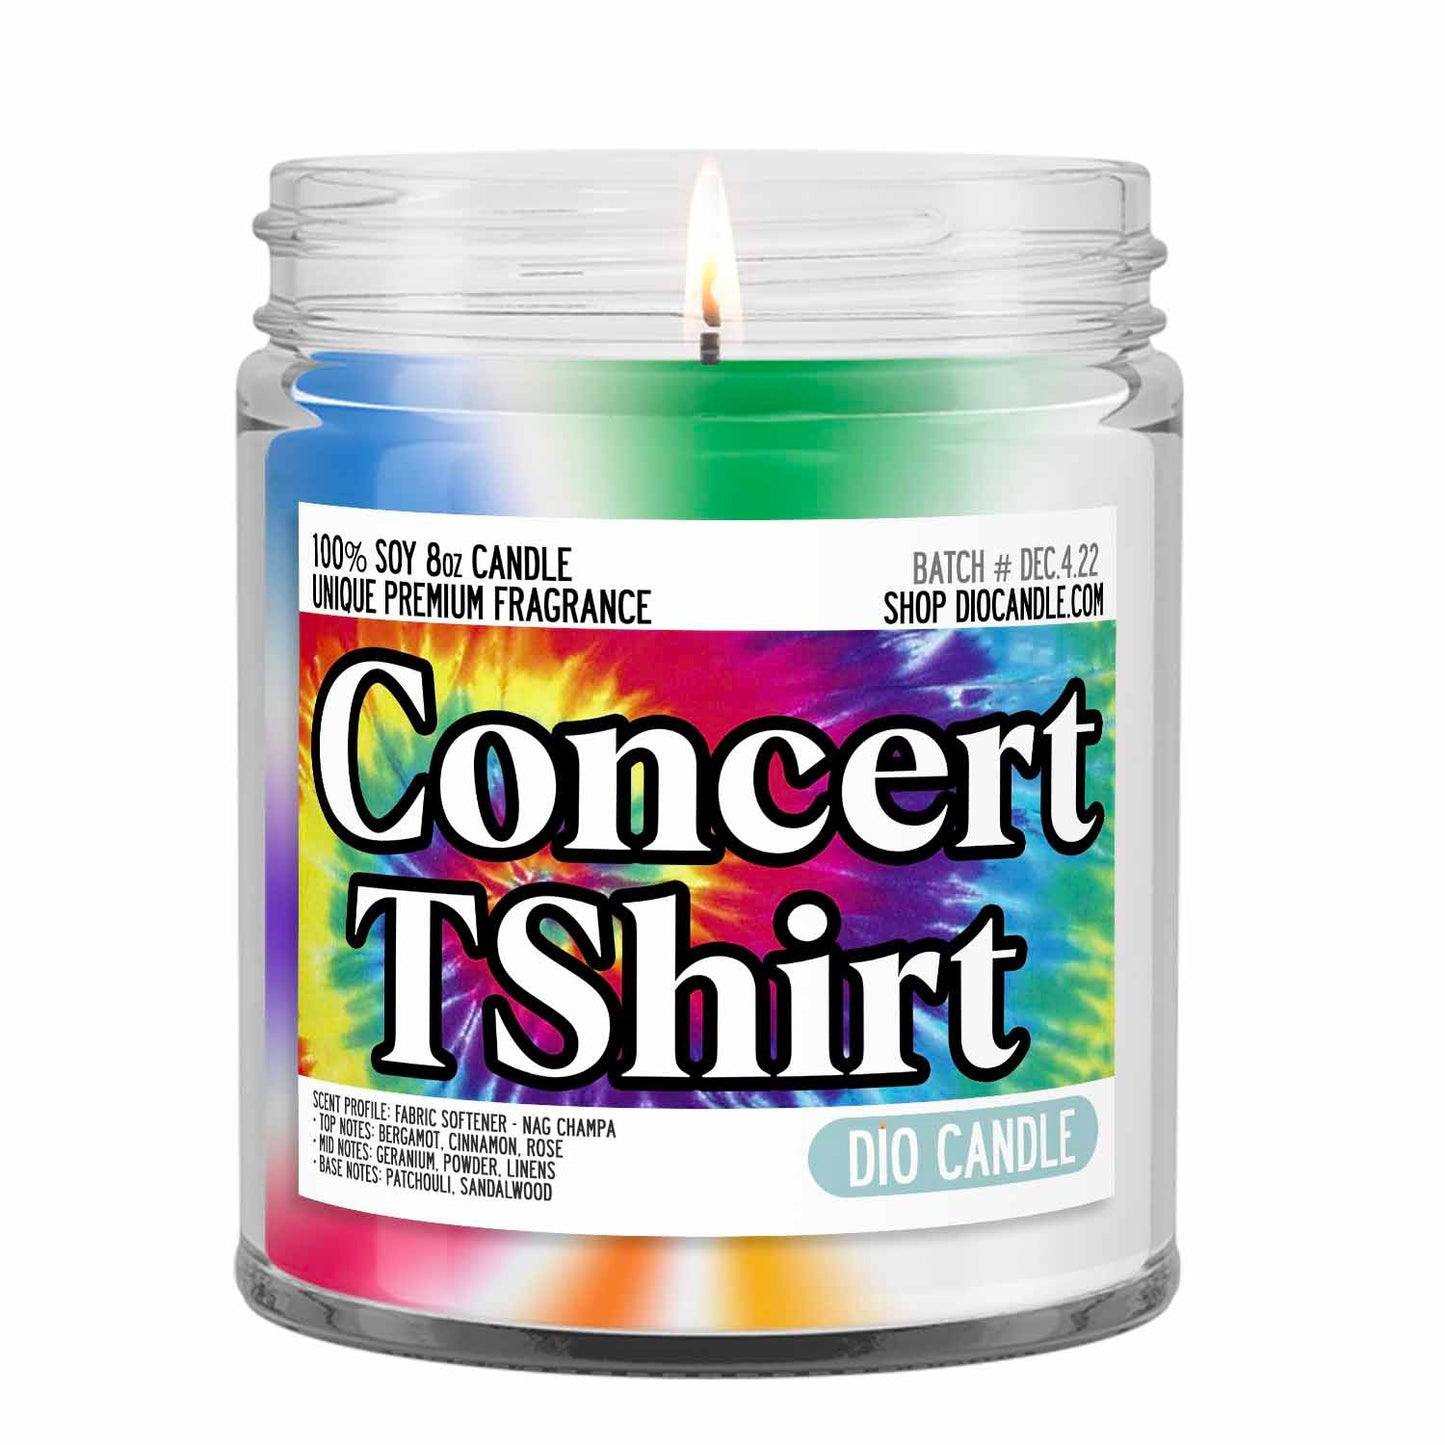 Concert Tee Shirt Candle